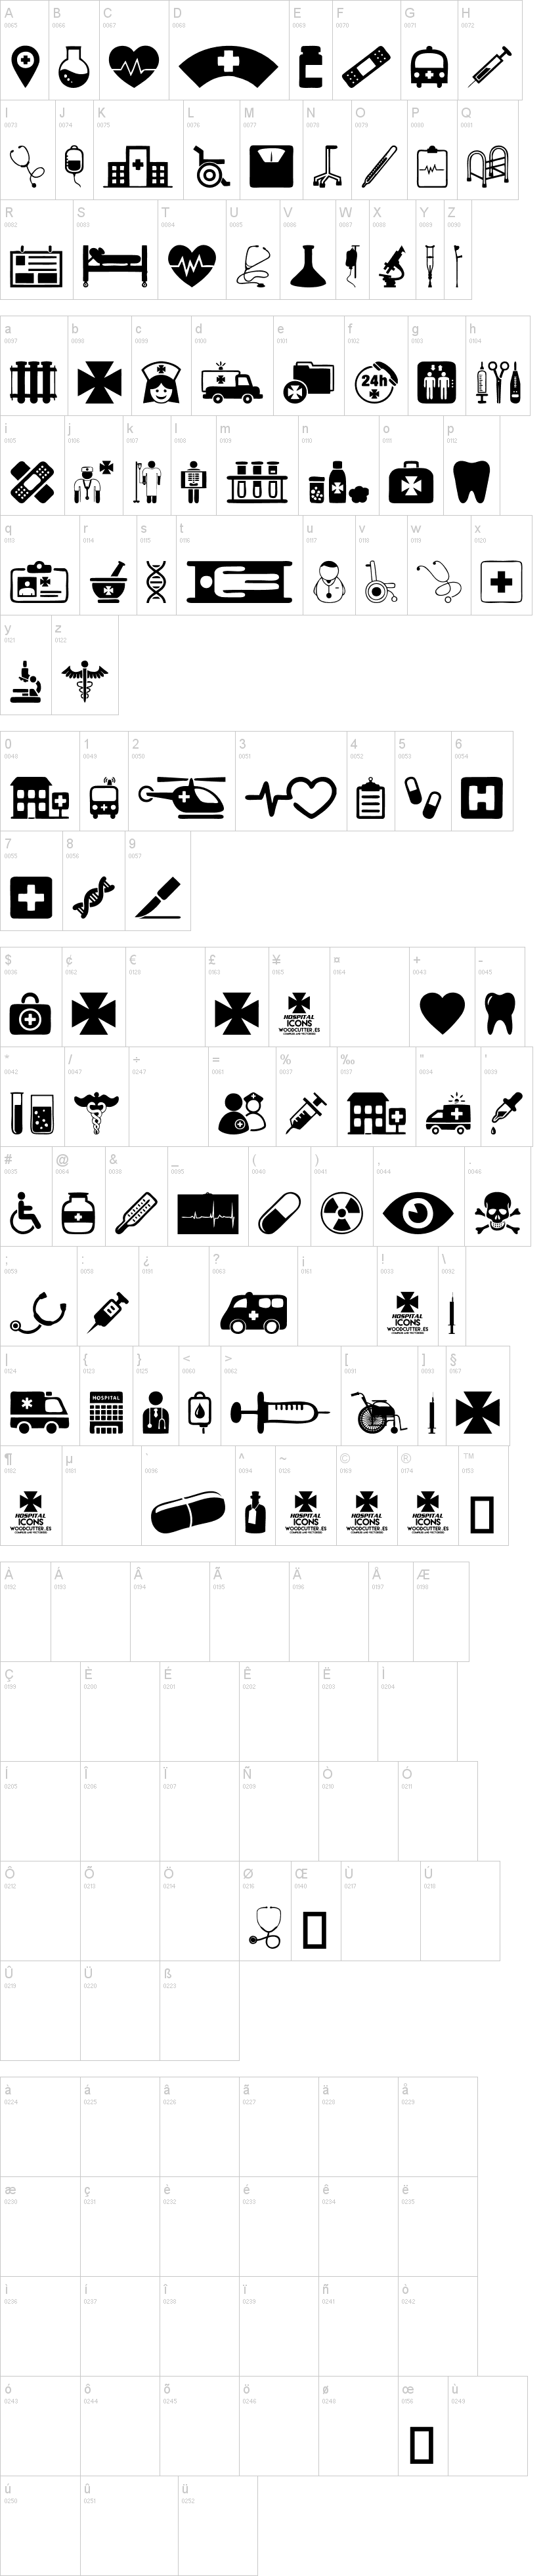 Hospital Icons